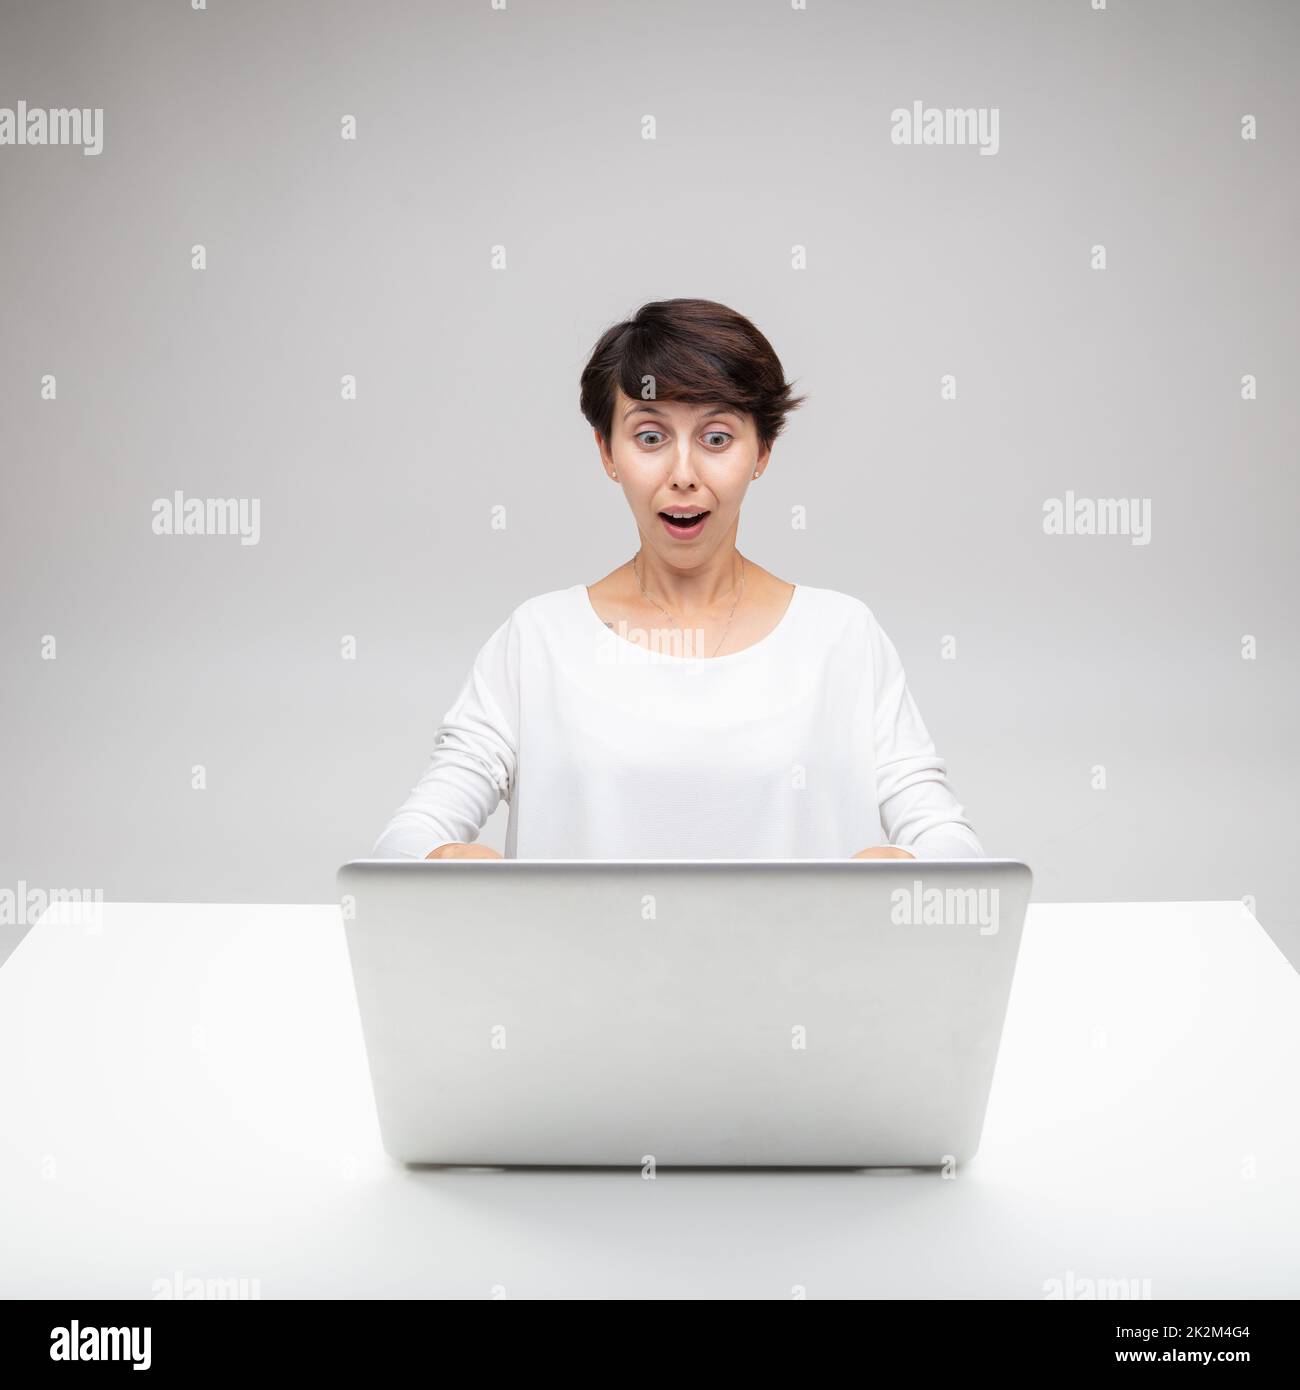 Astonished woman gawping at a laptop Stock Photo